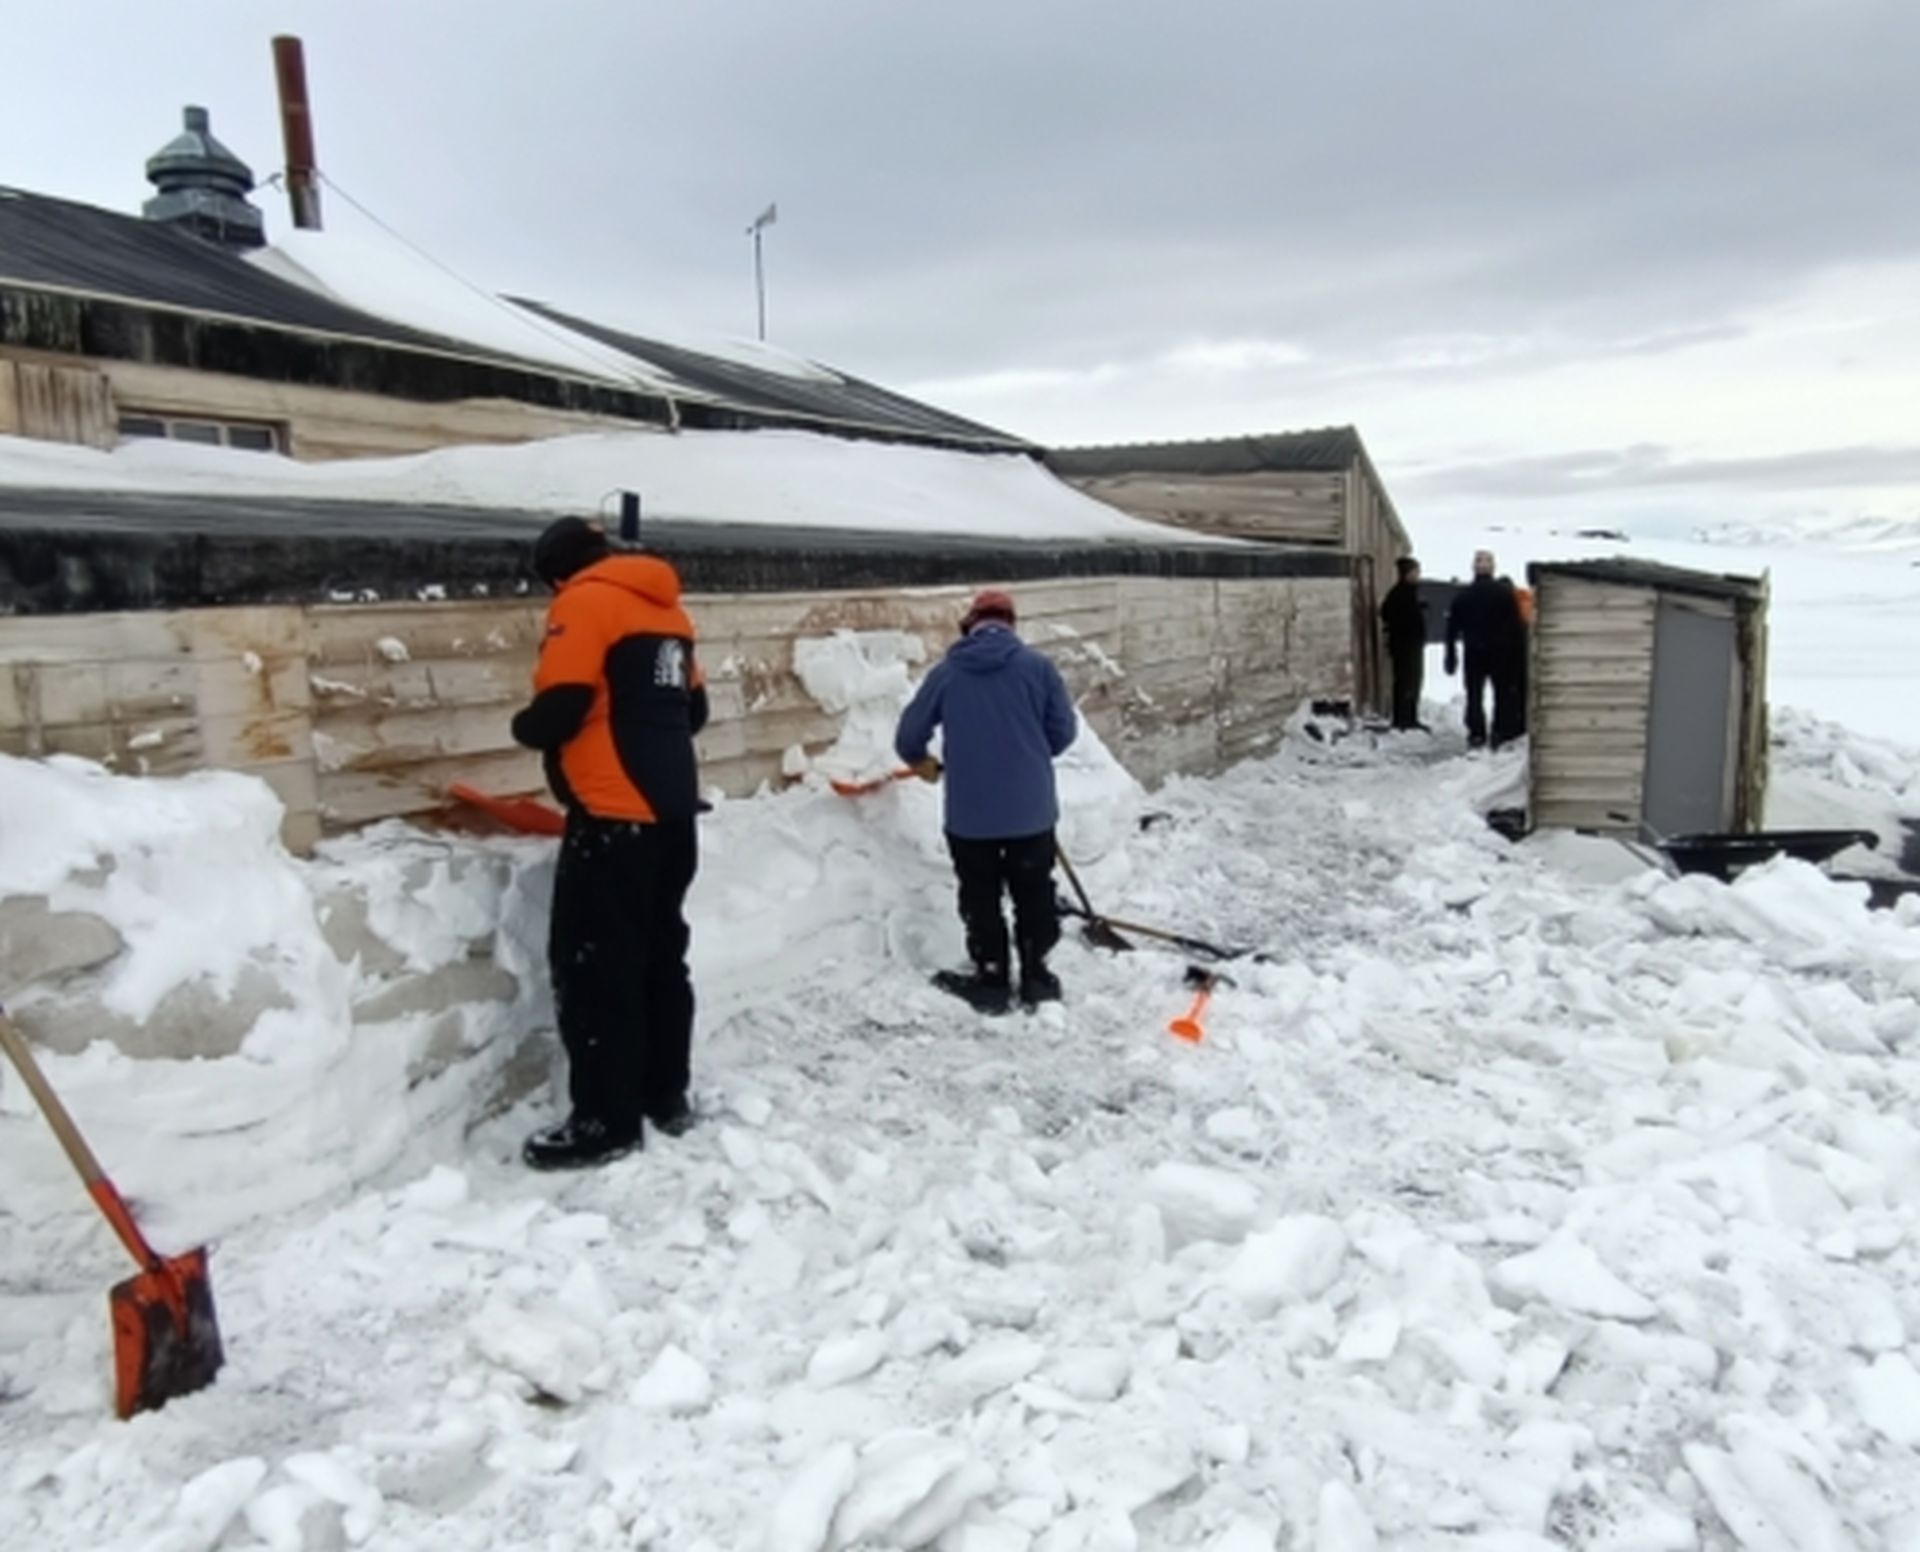 Snow removal at Scott’s Terra Nova Hut, Cape Evans.